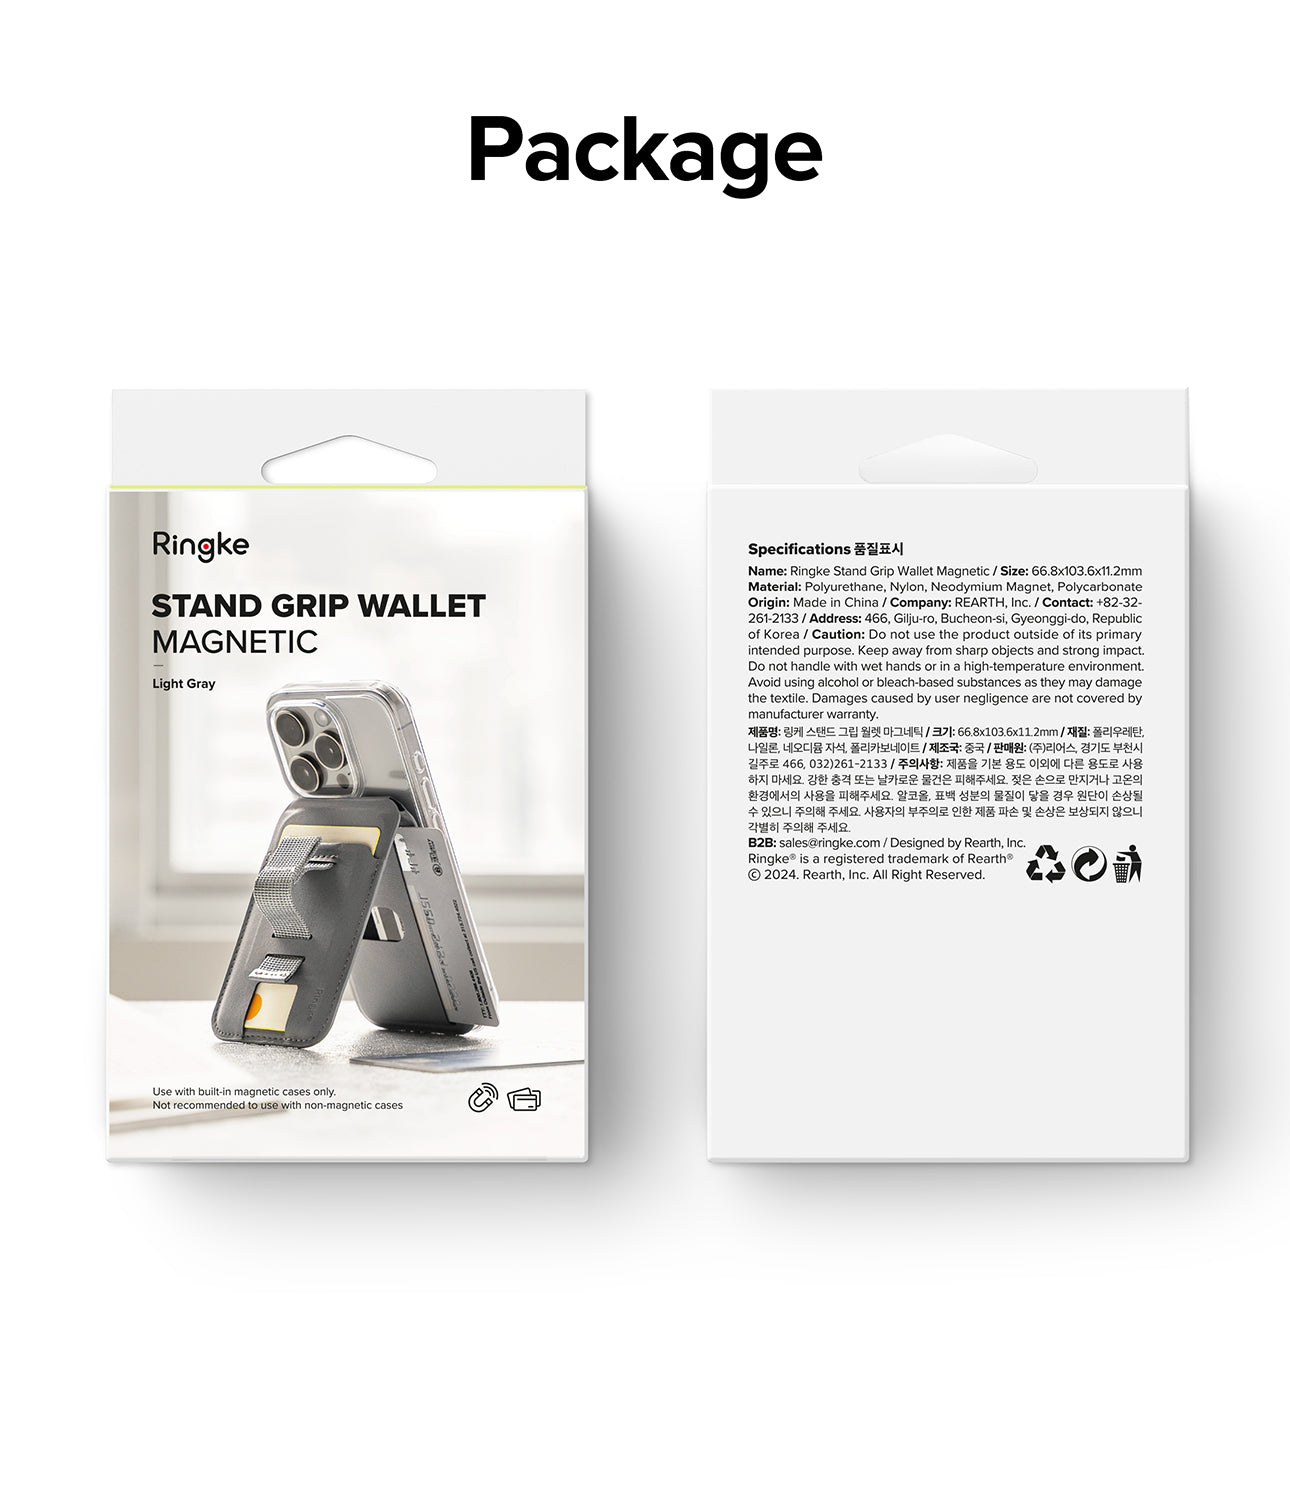 Ringke Stand Grip Magnetic Card Holder Wallet - Package